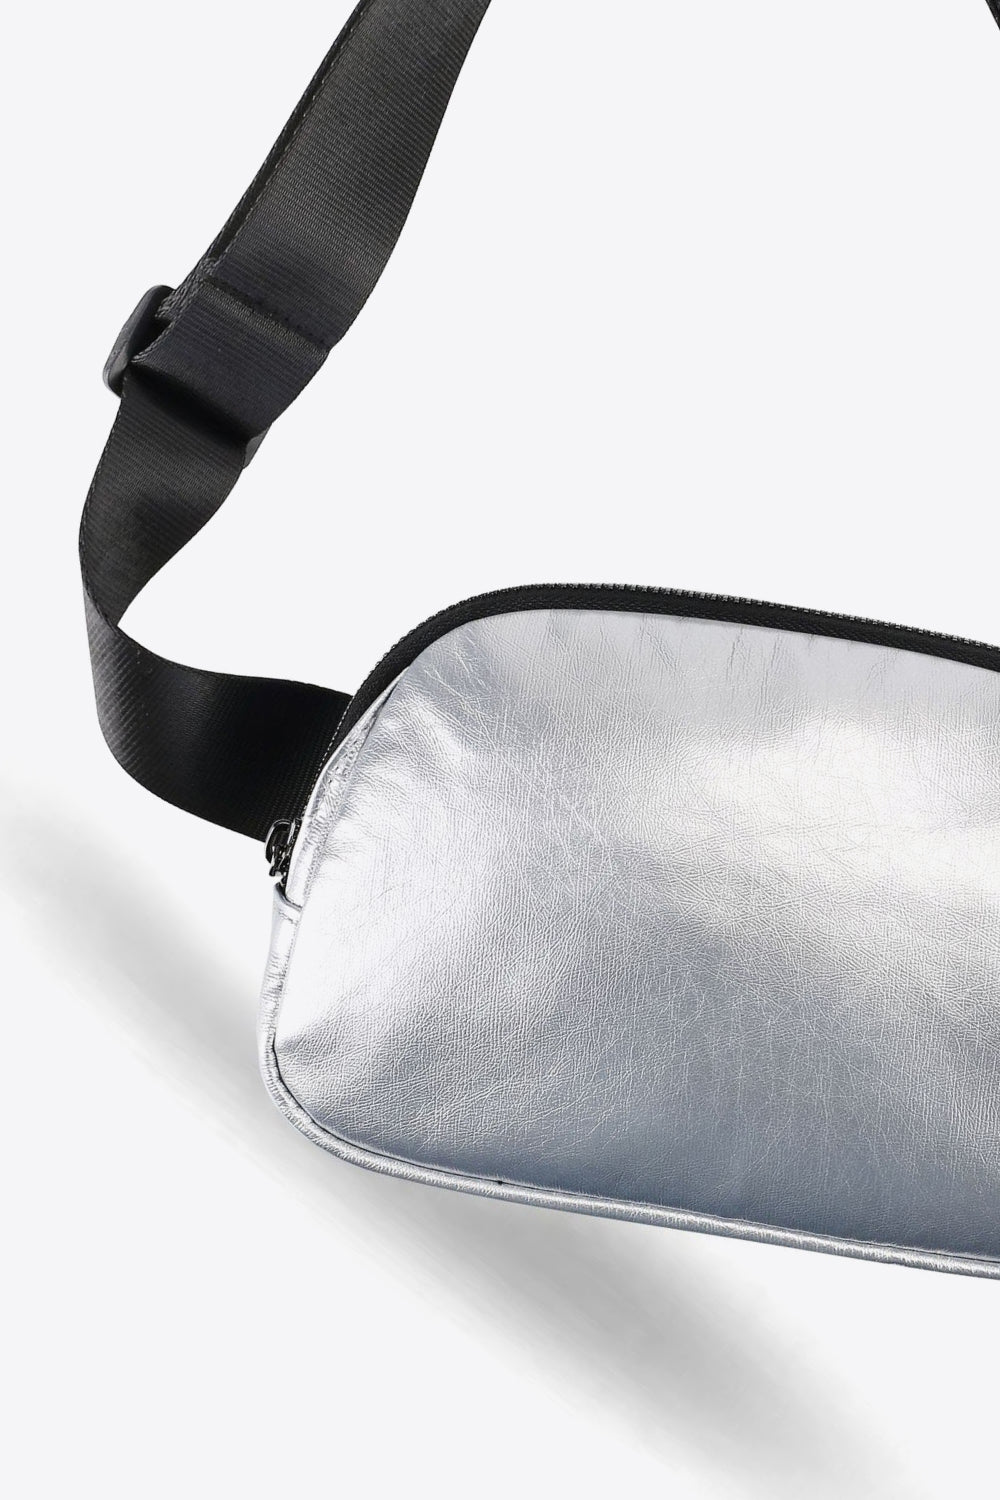 PU Leather Adjustable Strap Sling Bag COCO CRESS